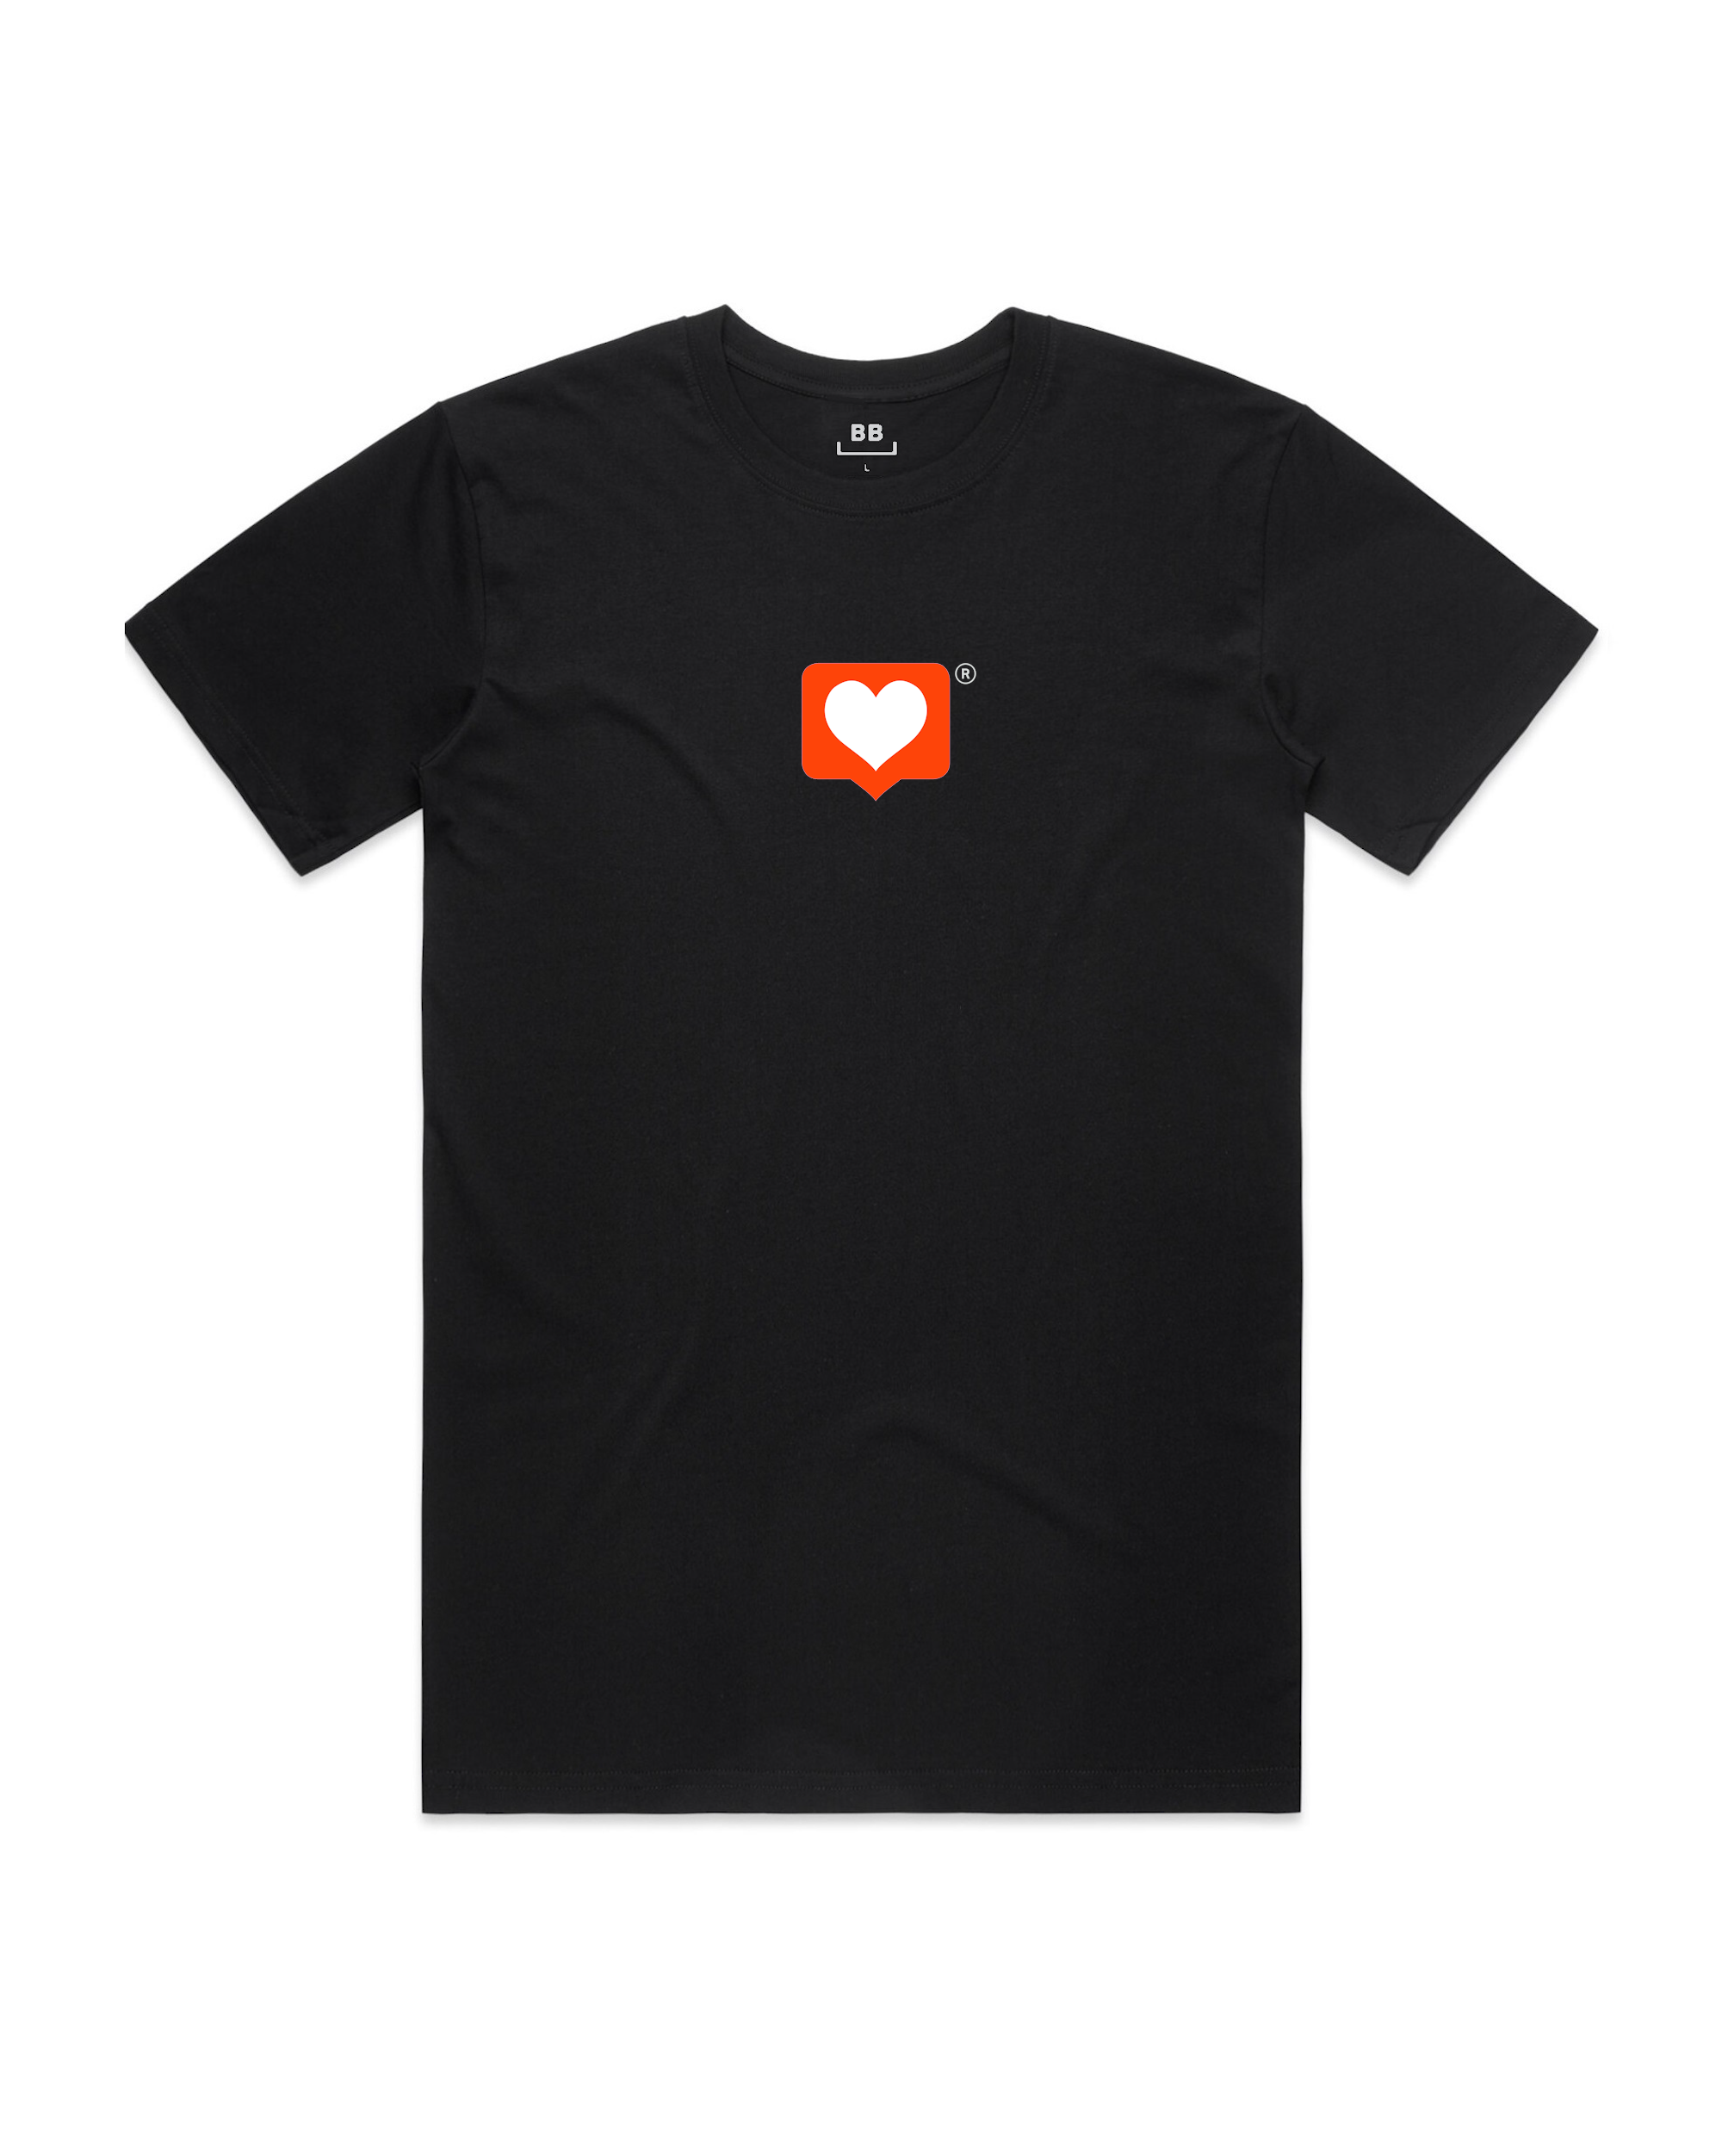 Love Clothing Co 'Heart' Black Tee